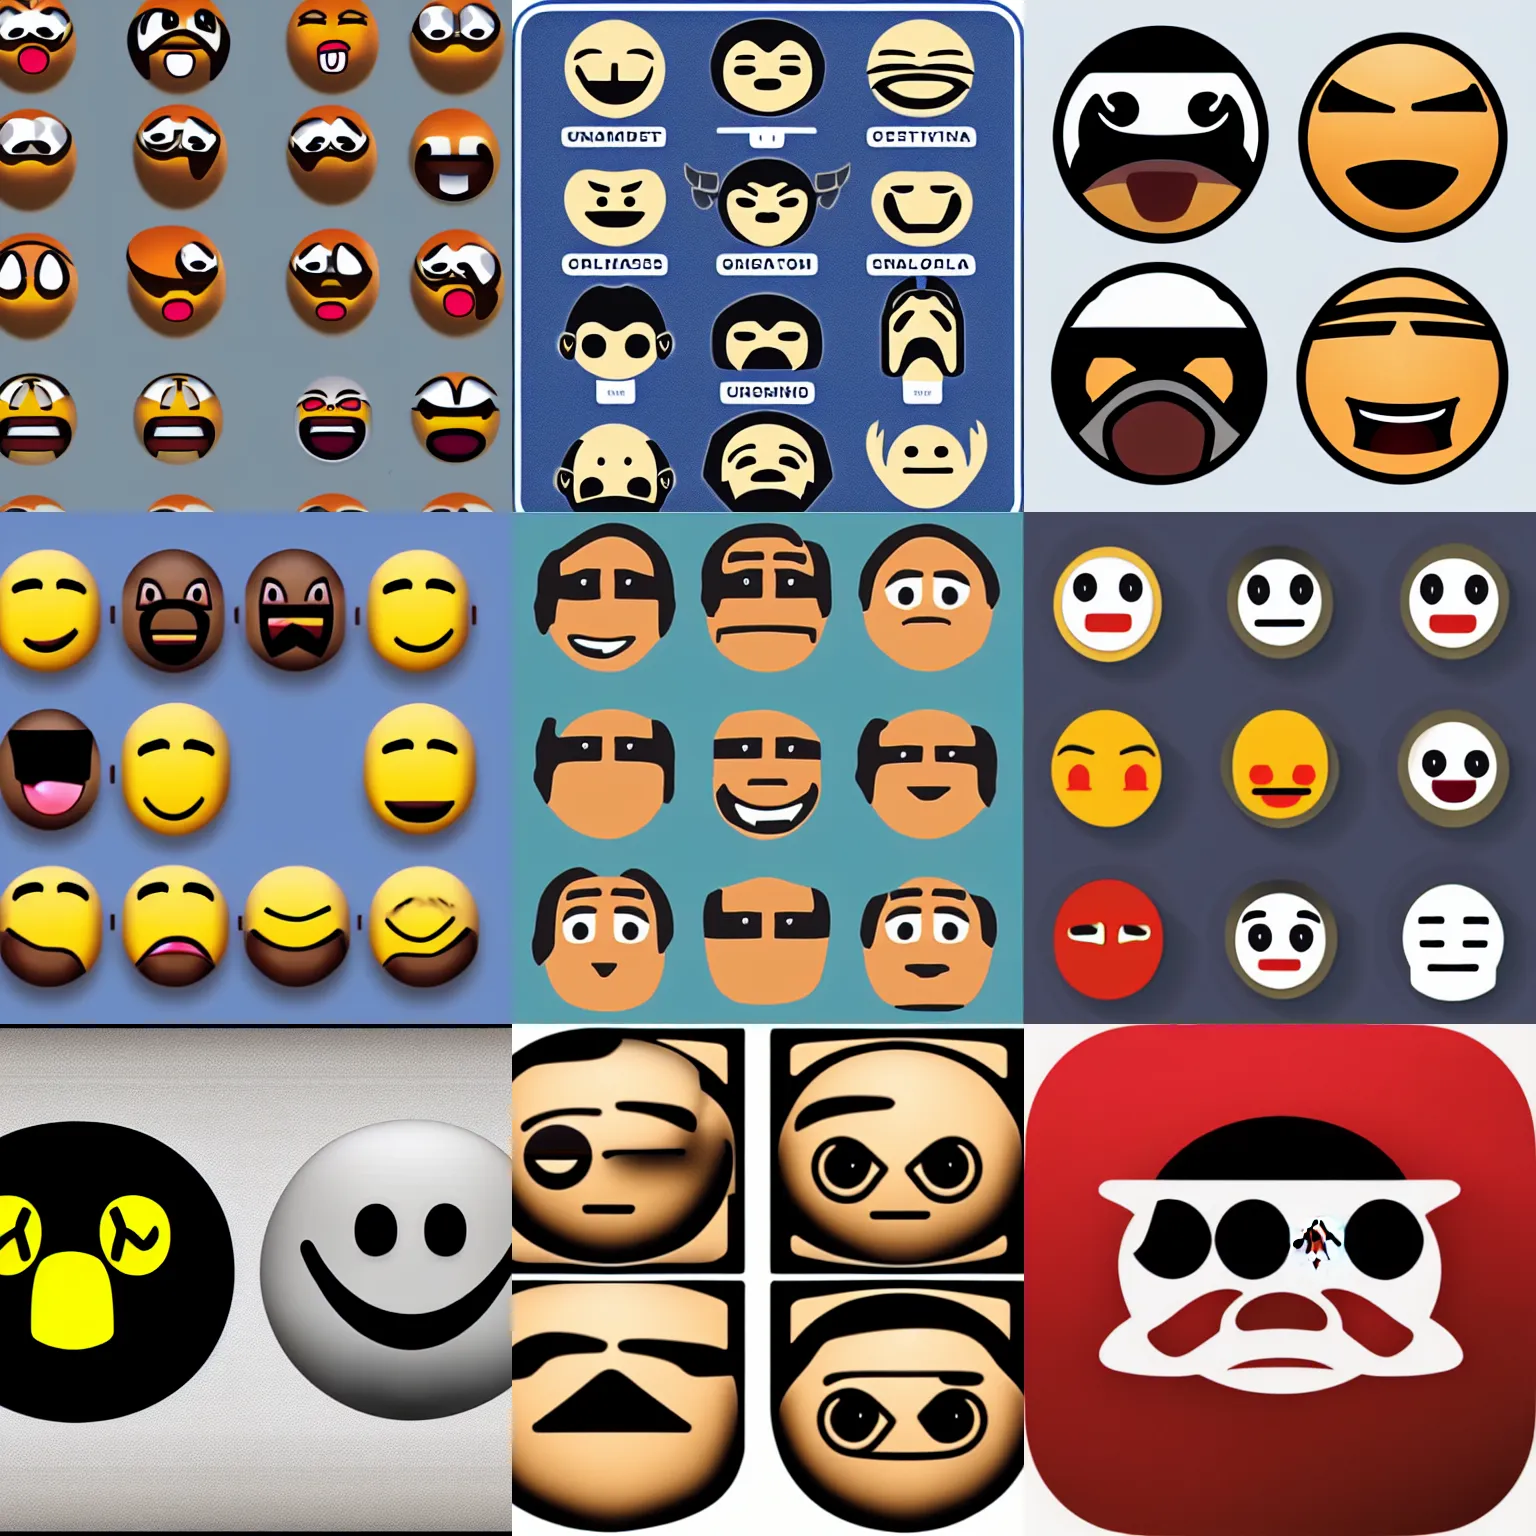 Prompt: Emojipedia Sample Images for Draft Emoji 15.0. canadian goose emoji. predator emoji. no fnord emoji. apocalypse emoji.